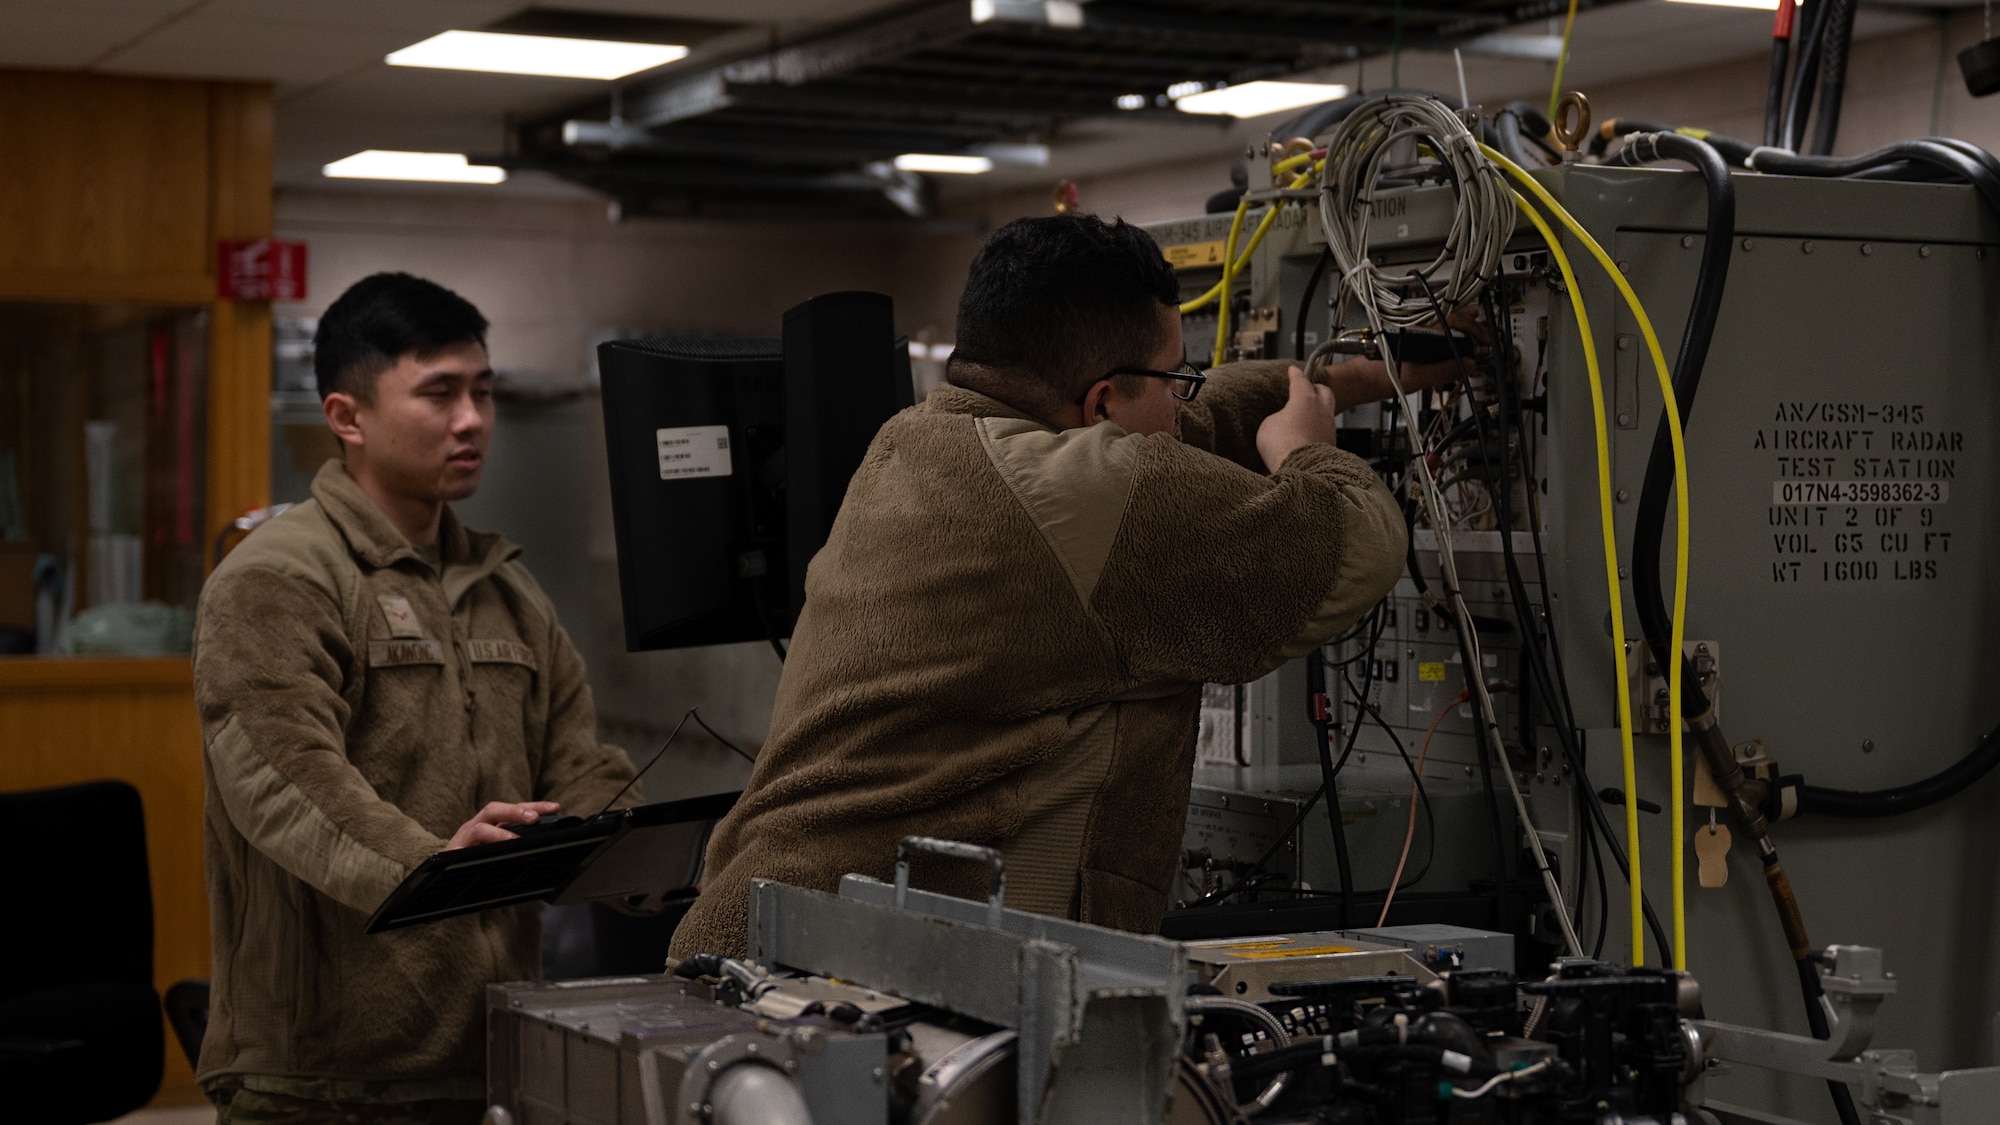 Two Airmen perform checks and maintenance on the last Enhanced Aircraft Radar test Station.